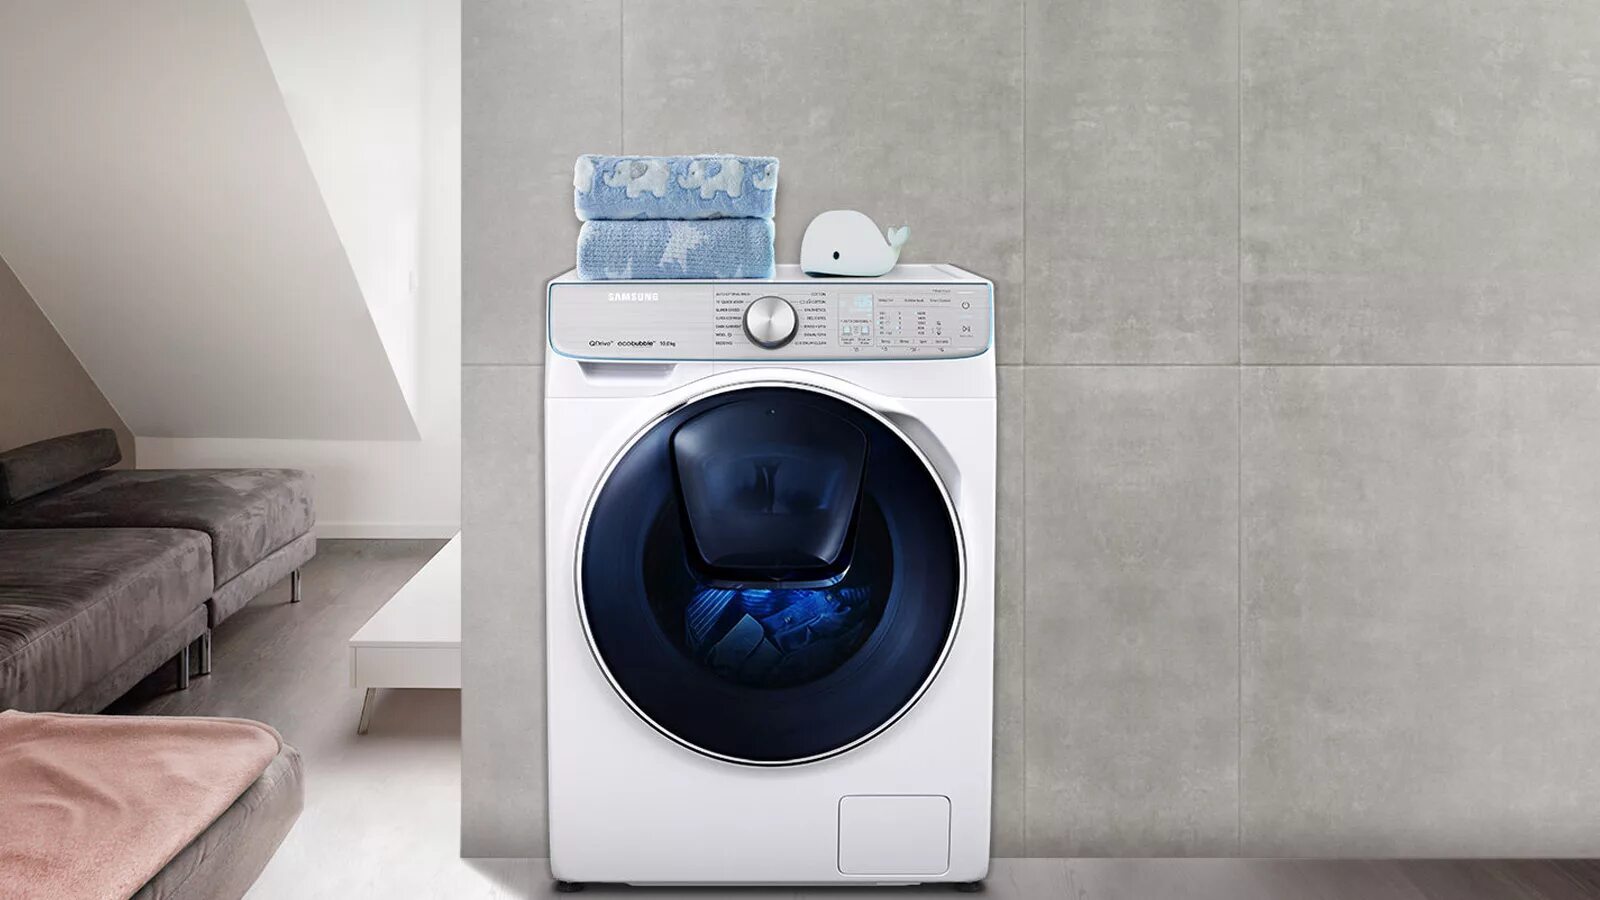 Samsung QUICKDRIVE. Стиральная машина Samsung quick Drive. Washing Machine Samsung 2020. Samsung Washer Dryer 2020.. Топ стиральной машины 2020